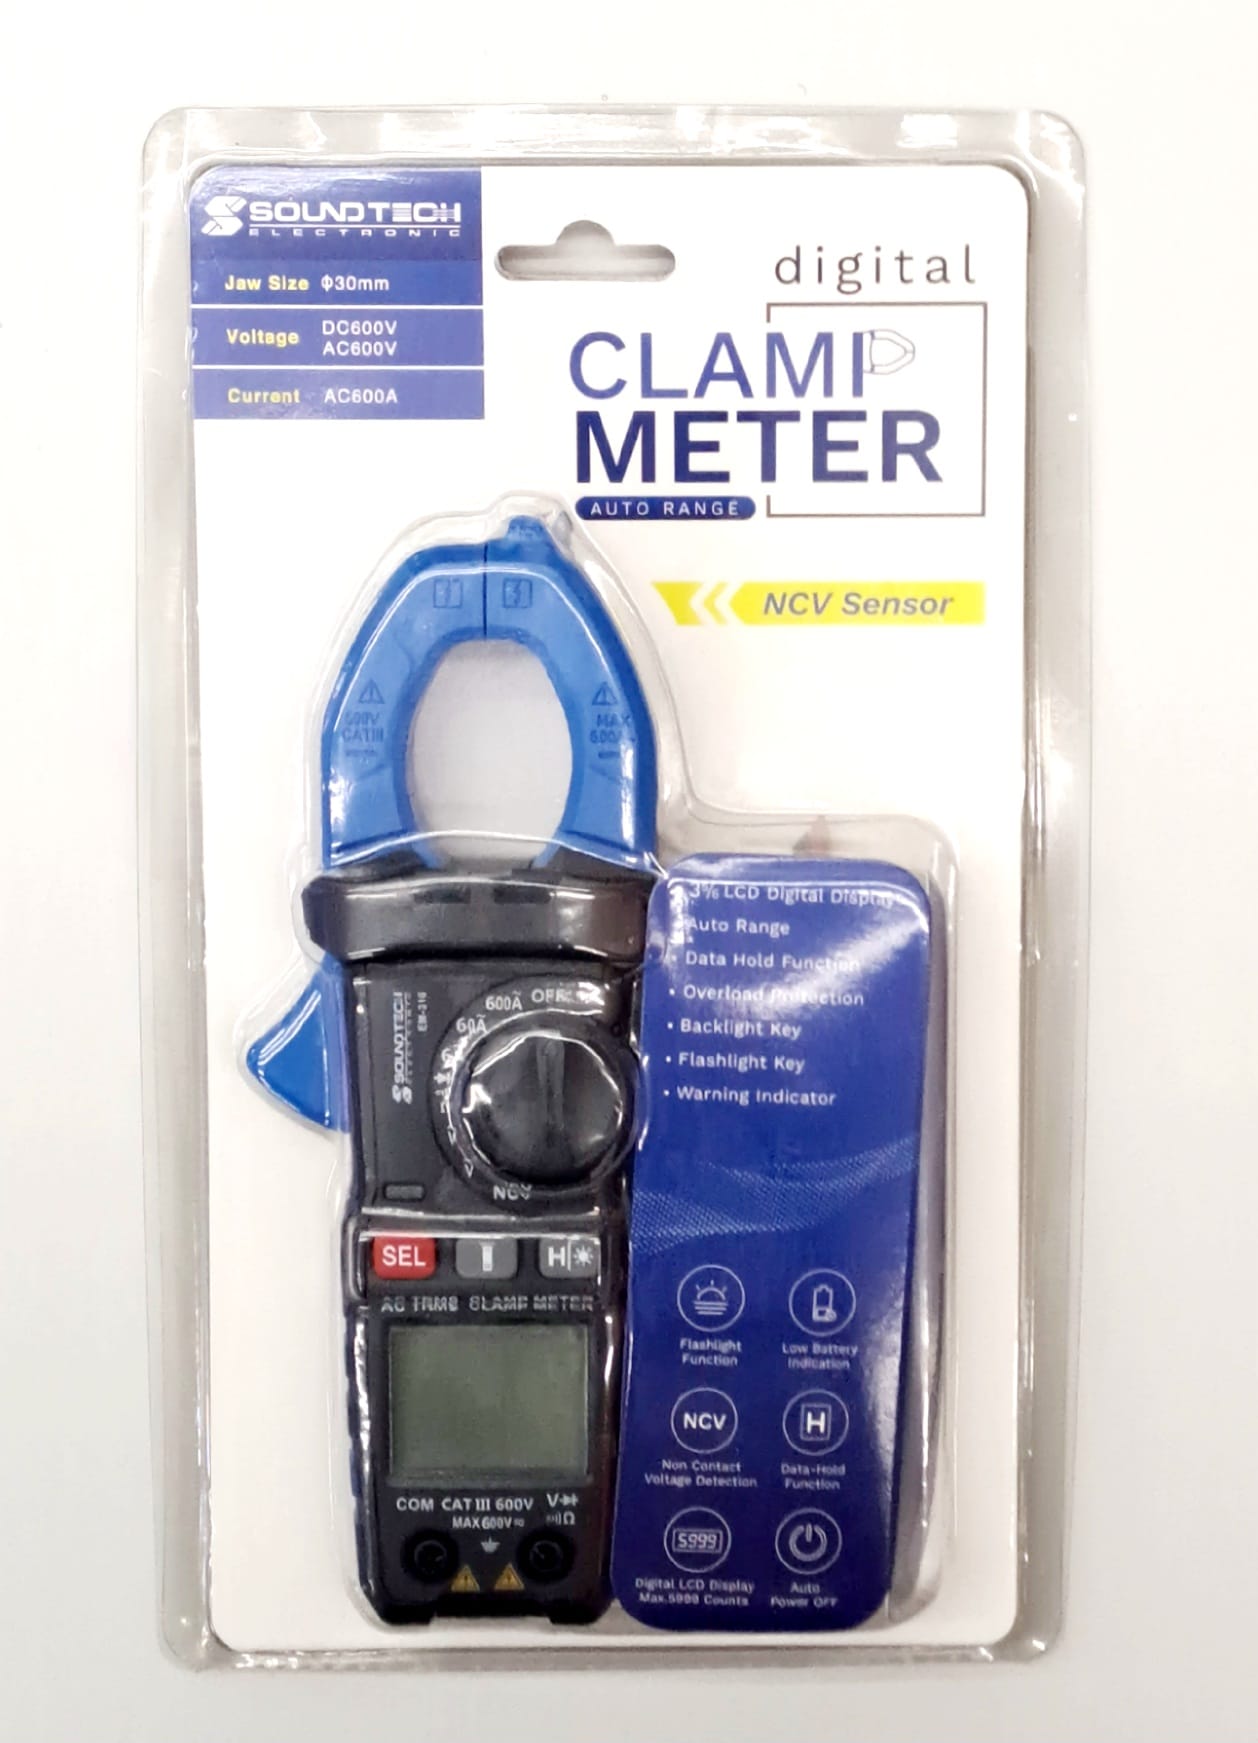 Soundtech Digital Clamp Meter